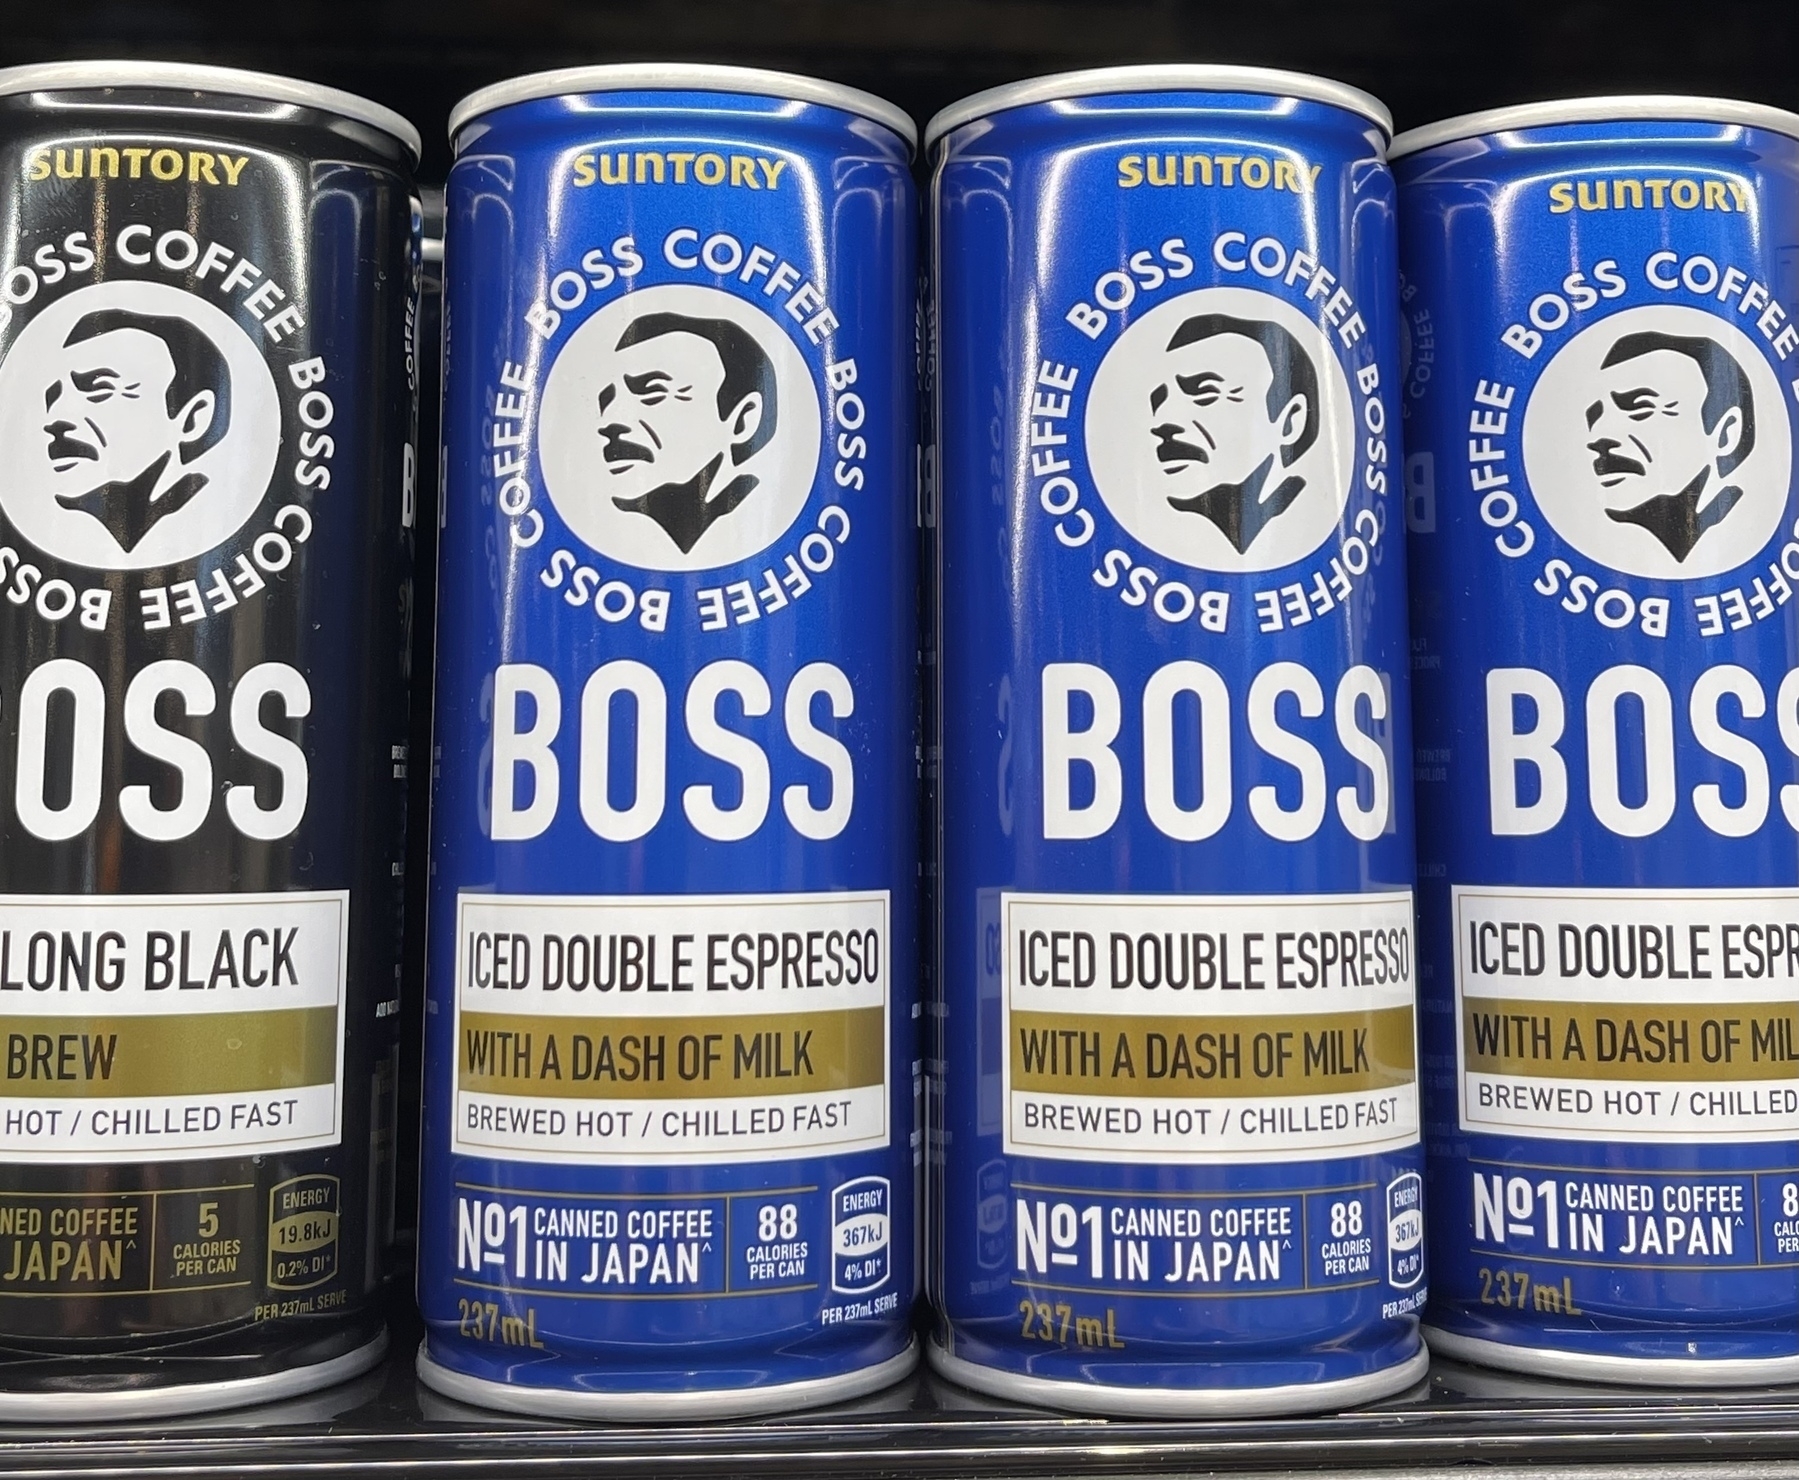 Cans of Suntory ‘Boss’ iced coffee.